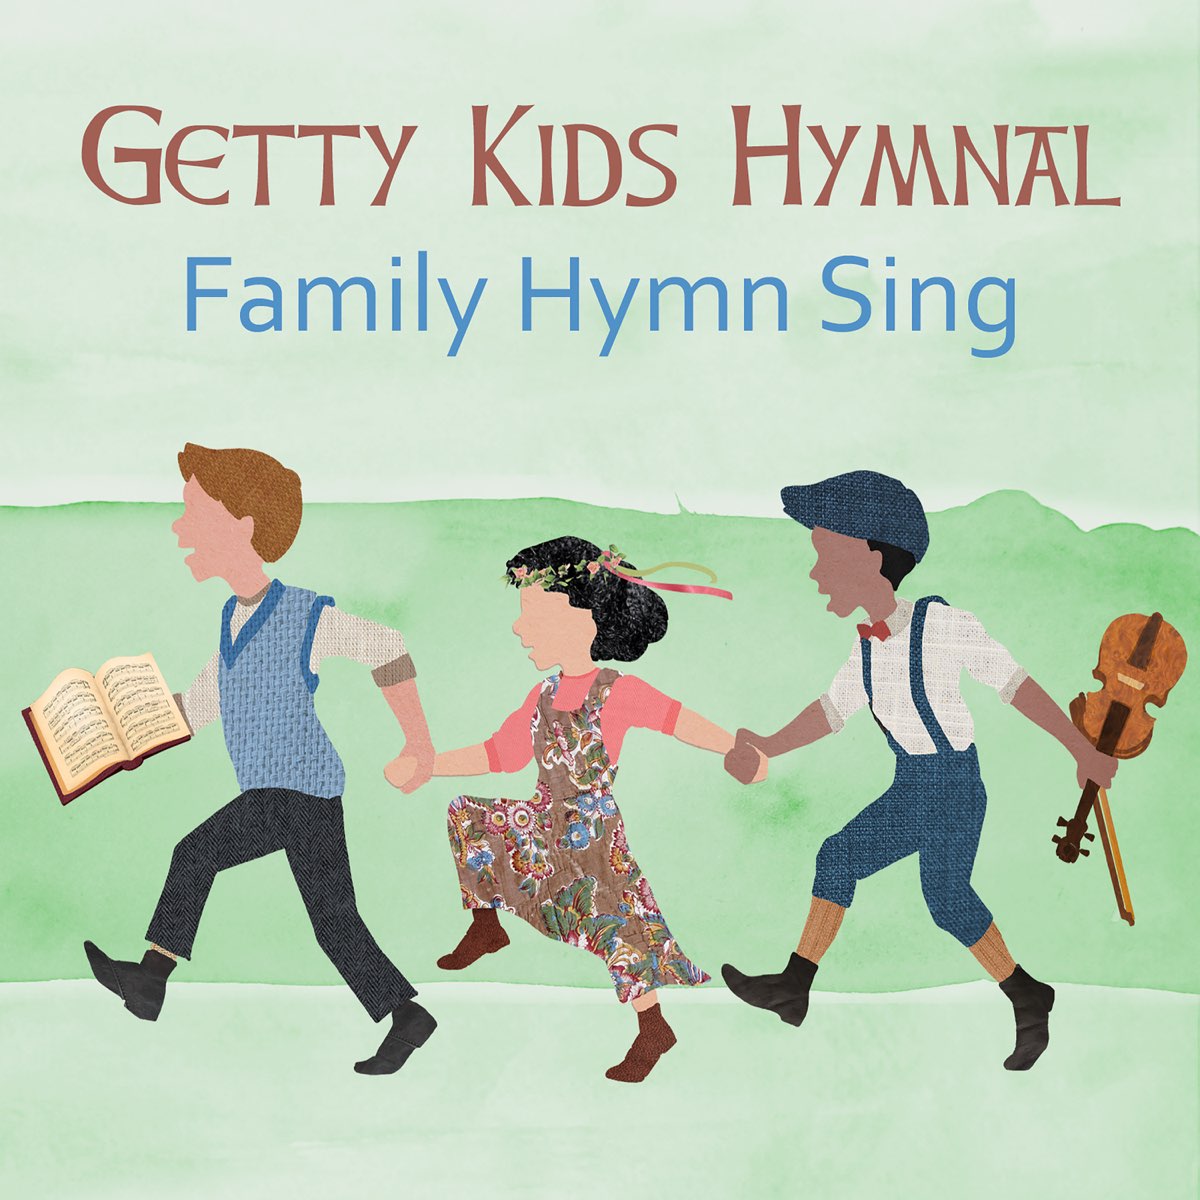 Family sing. Getty Kaspers - Getty's album.